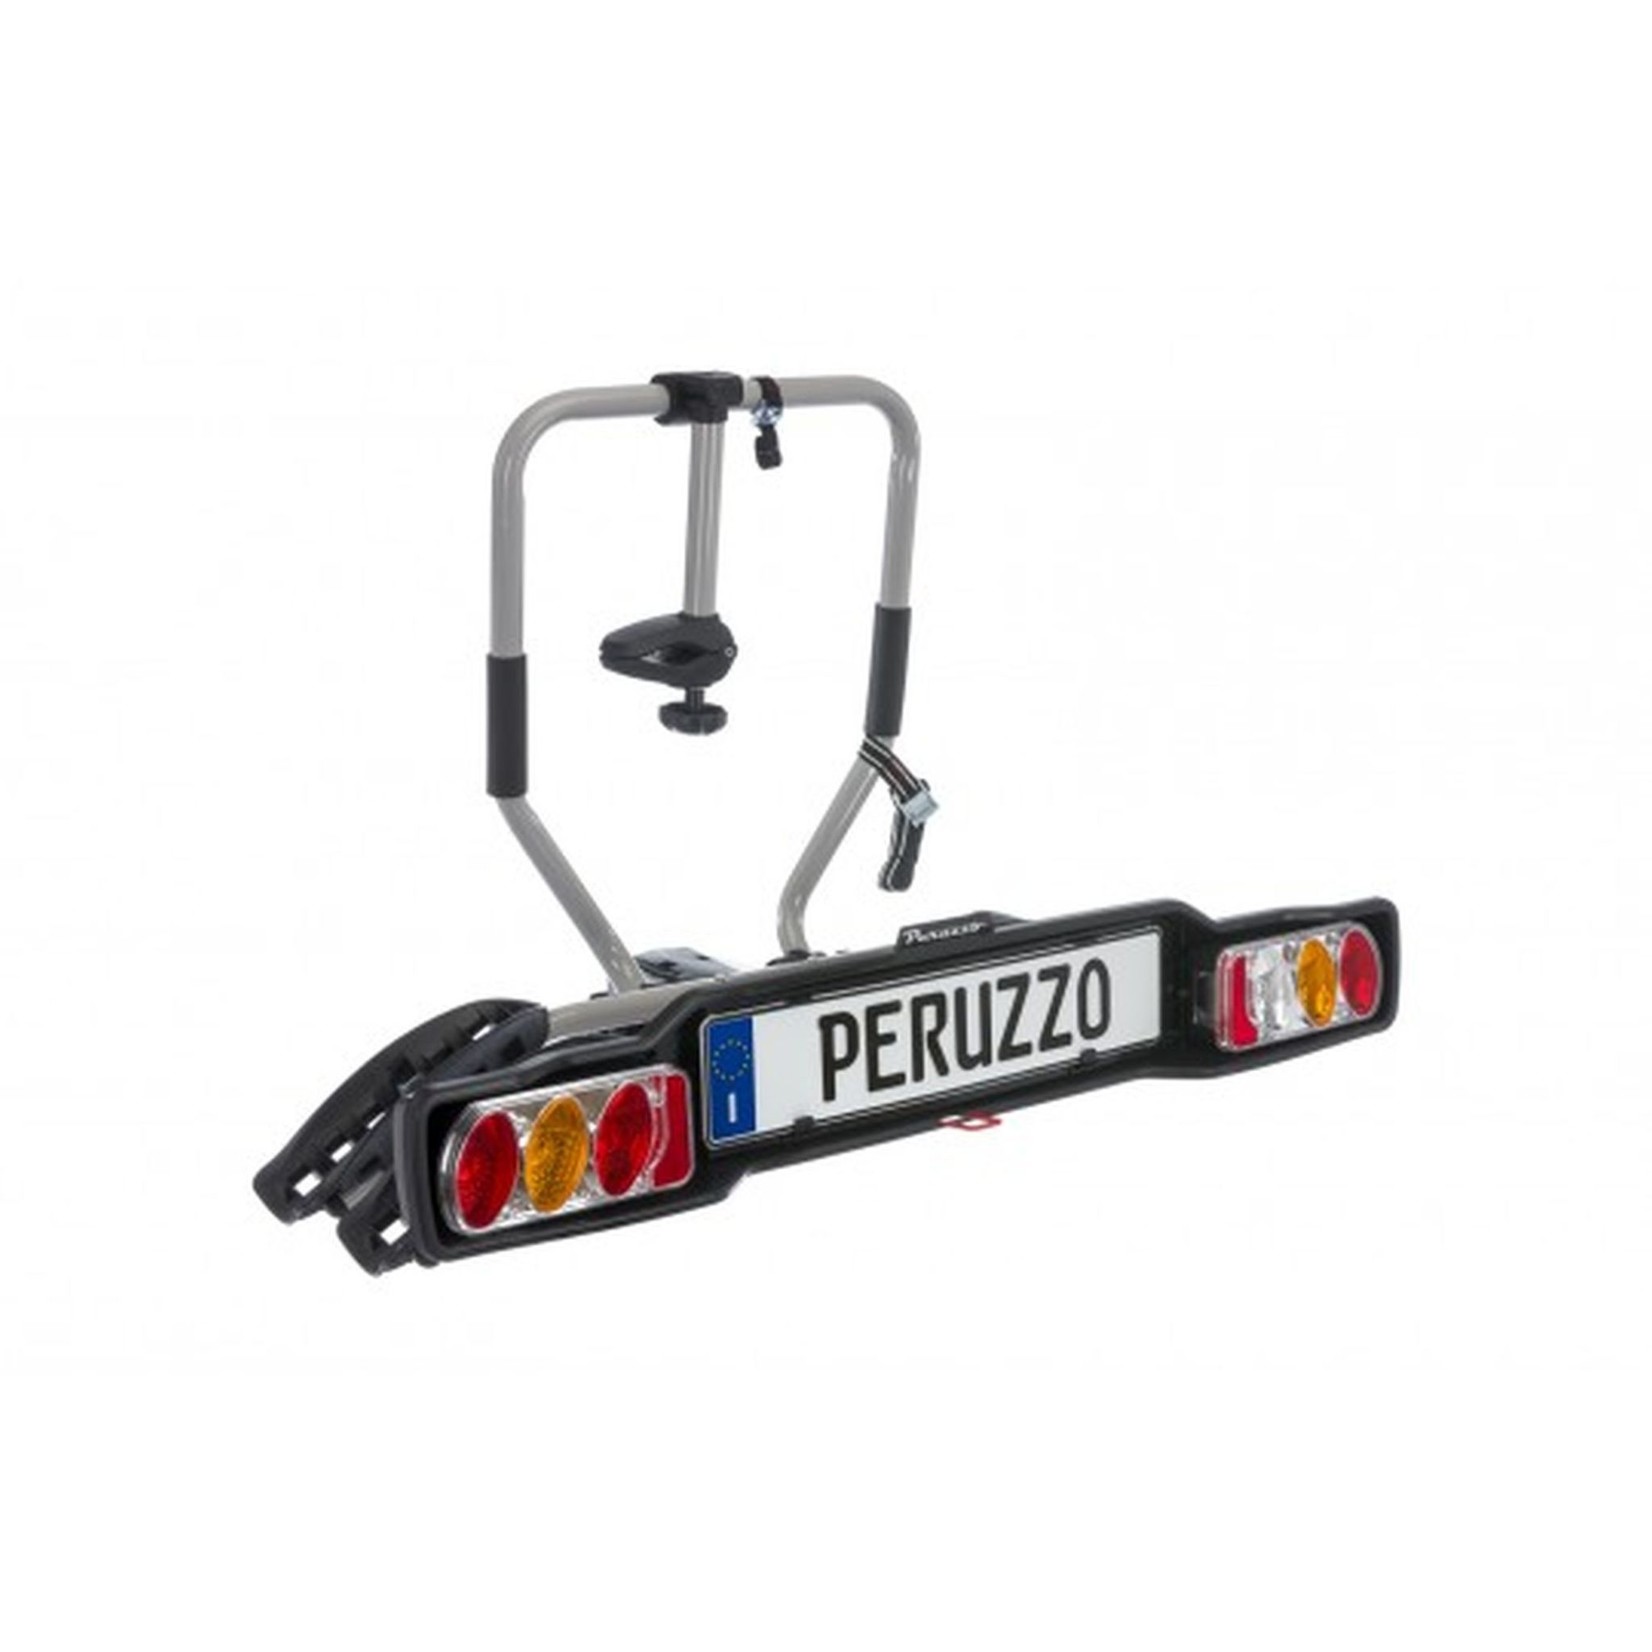 peruzzo Peruzzo Siena Towball 2 Bike Towbar Mounted Rack